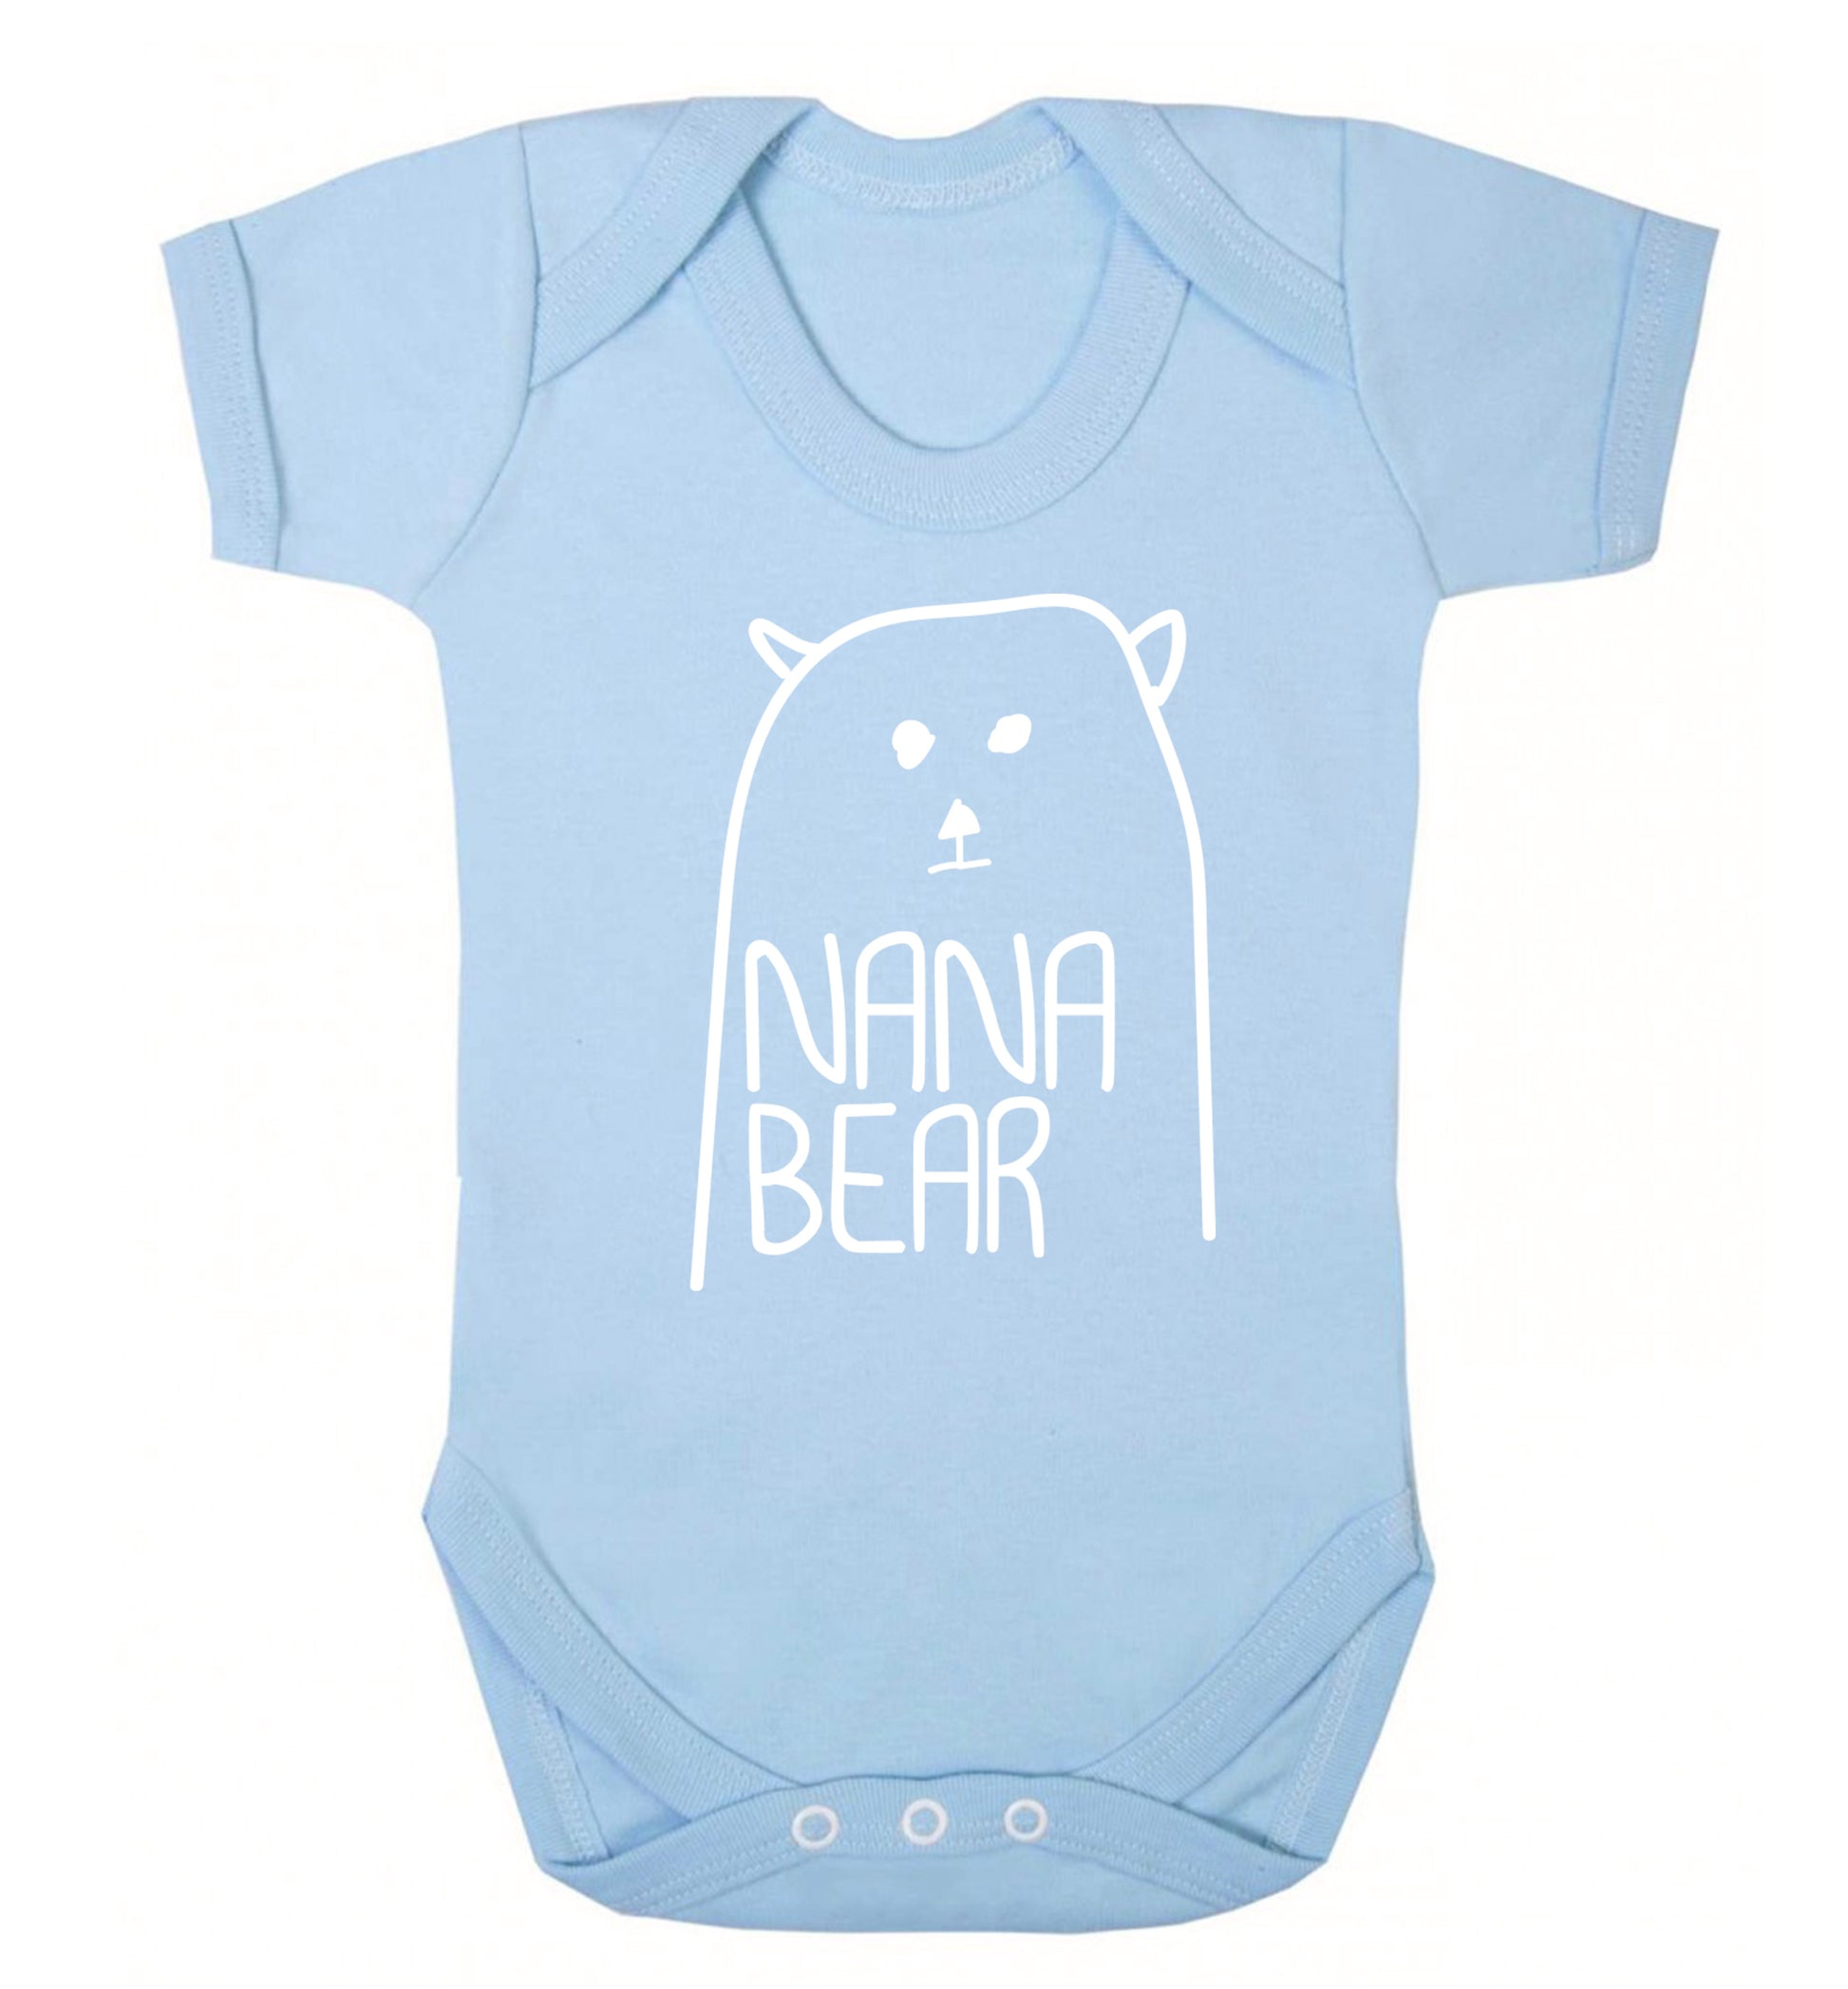 Nana bear Baby Vest pale blue 18-24 months